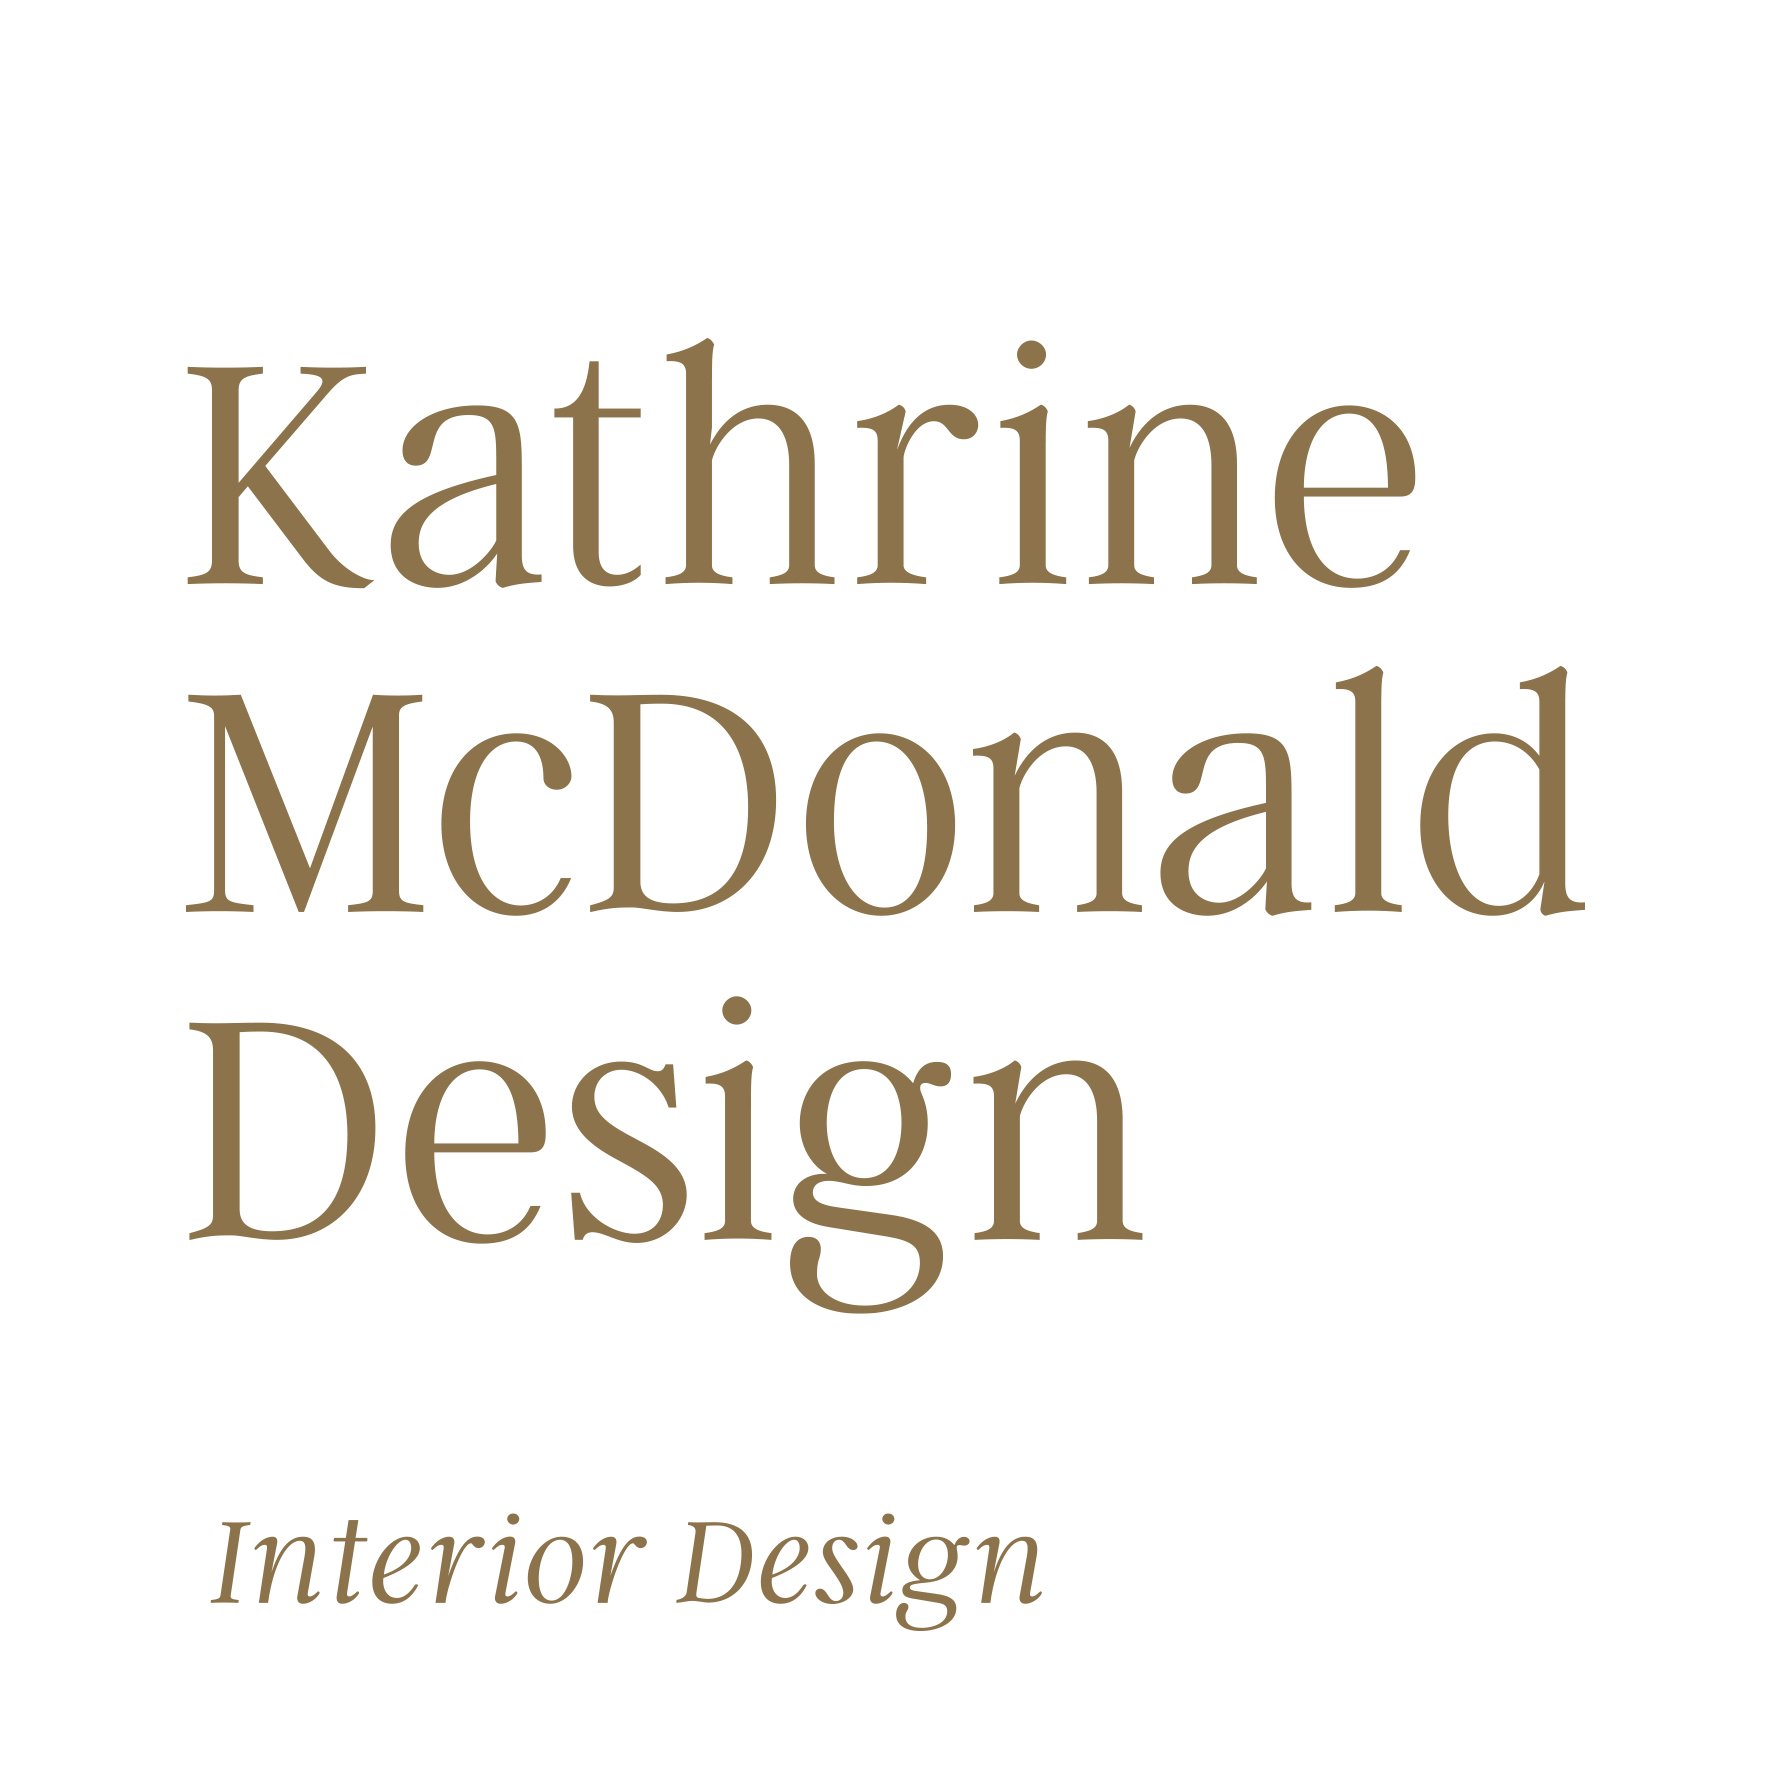 KathrineMcDonaldDesign_logo_19_v1.jpg